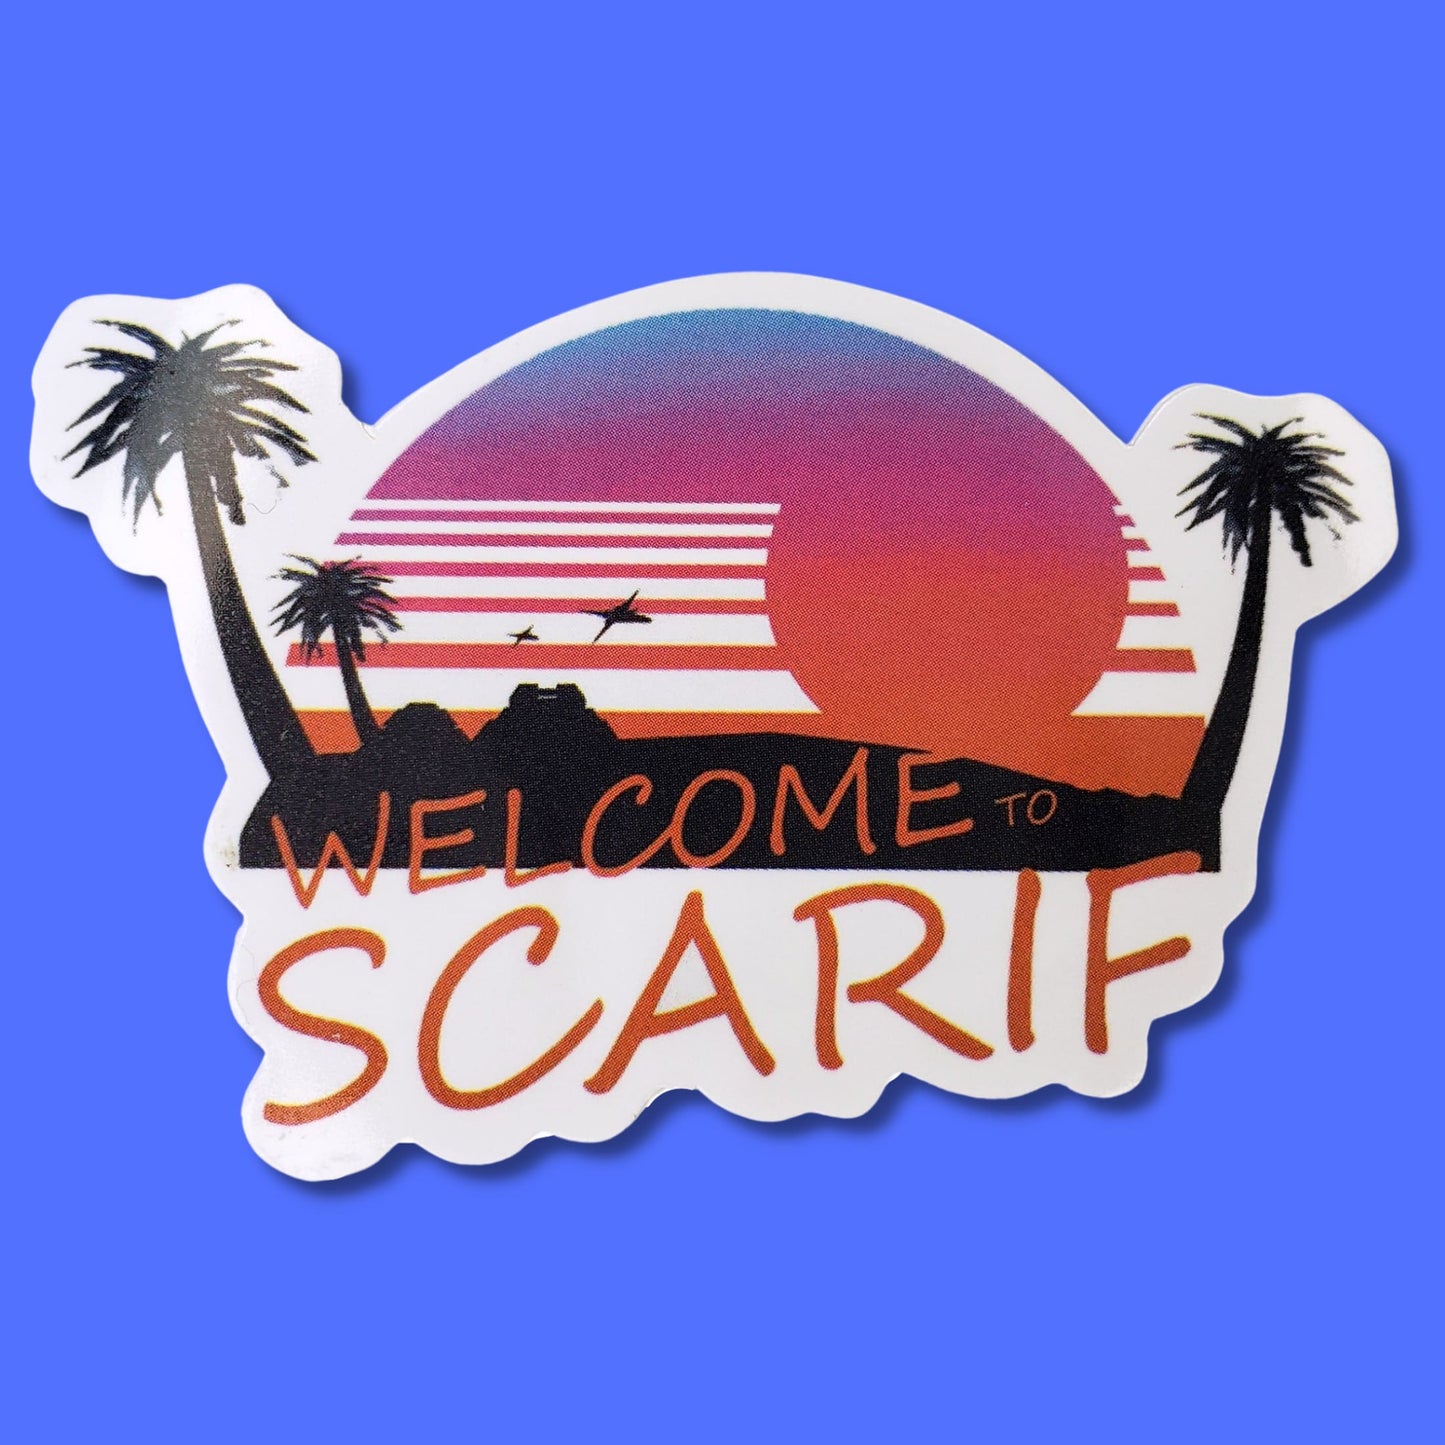 Scarif Beach (Star Wars Rogue One) Waterproof Sticker from Confetti Kitty, Only 1.00